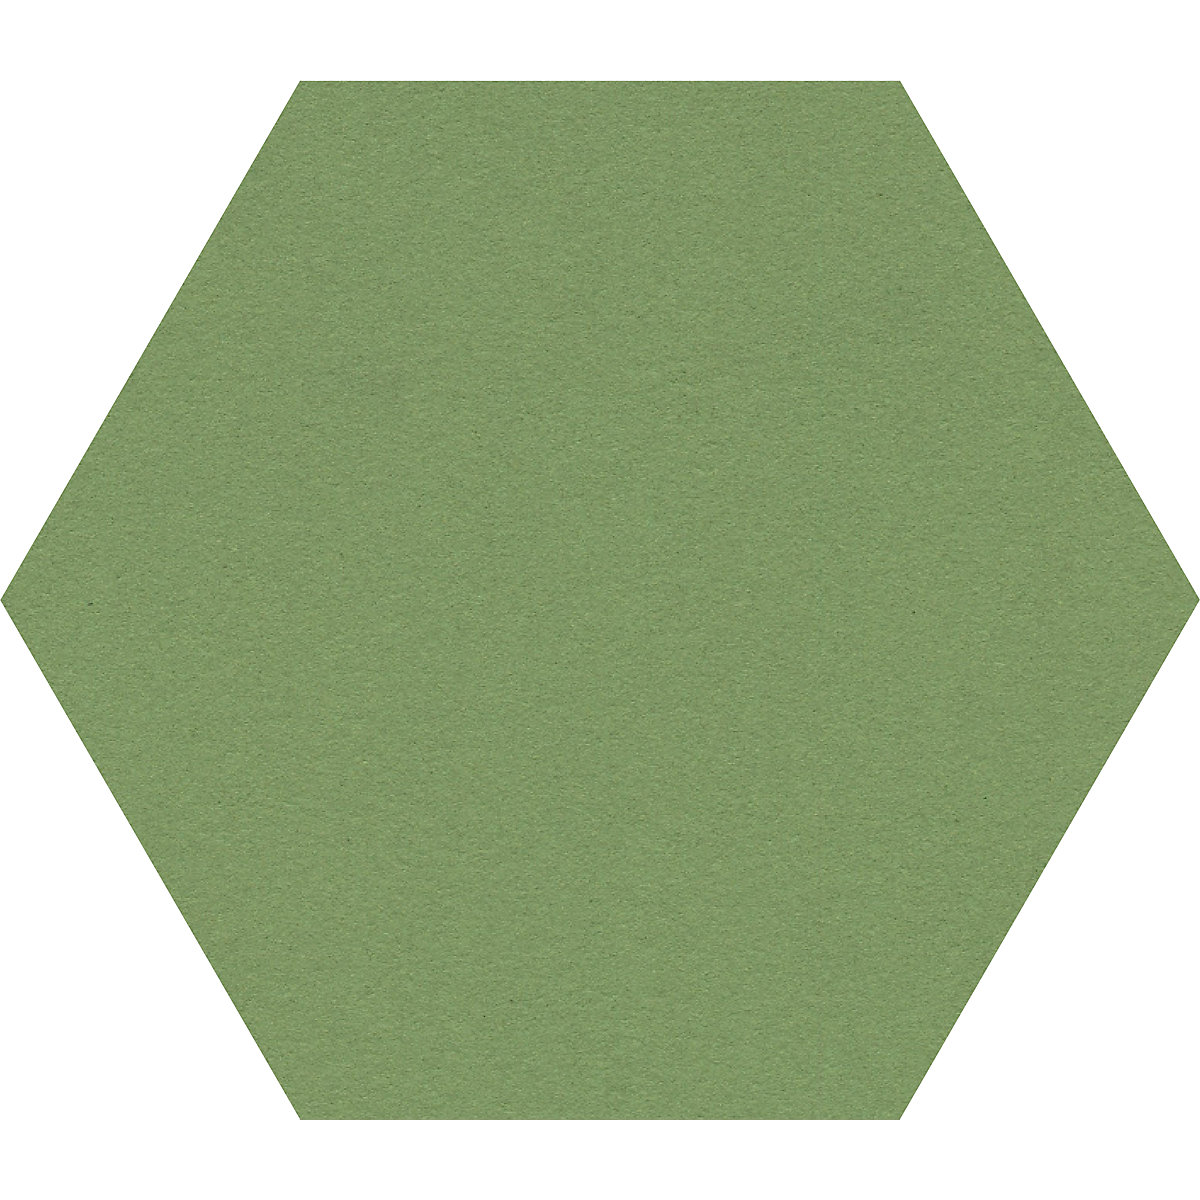 Design prikbord zeshoekig – Chameleon, kurk, b x h = 600 x 600 mm, groen-25